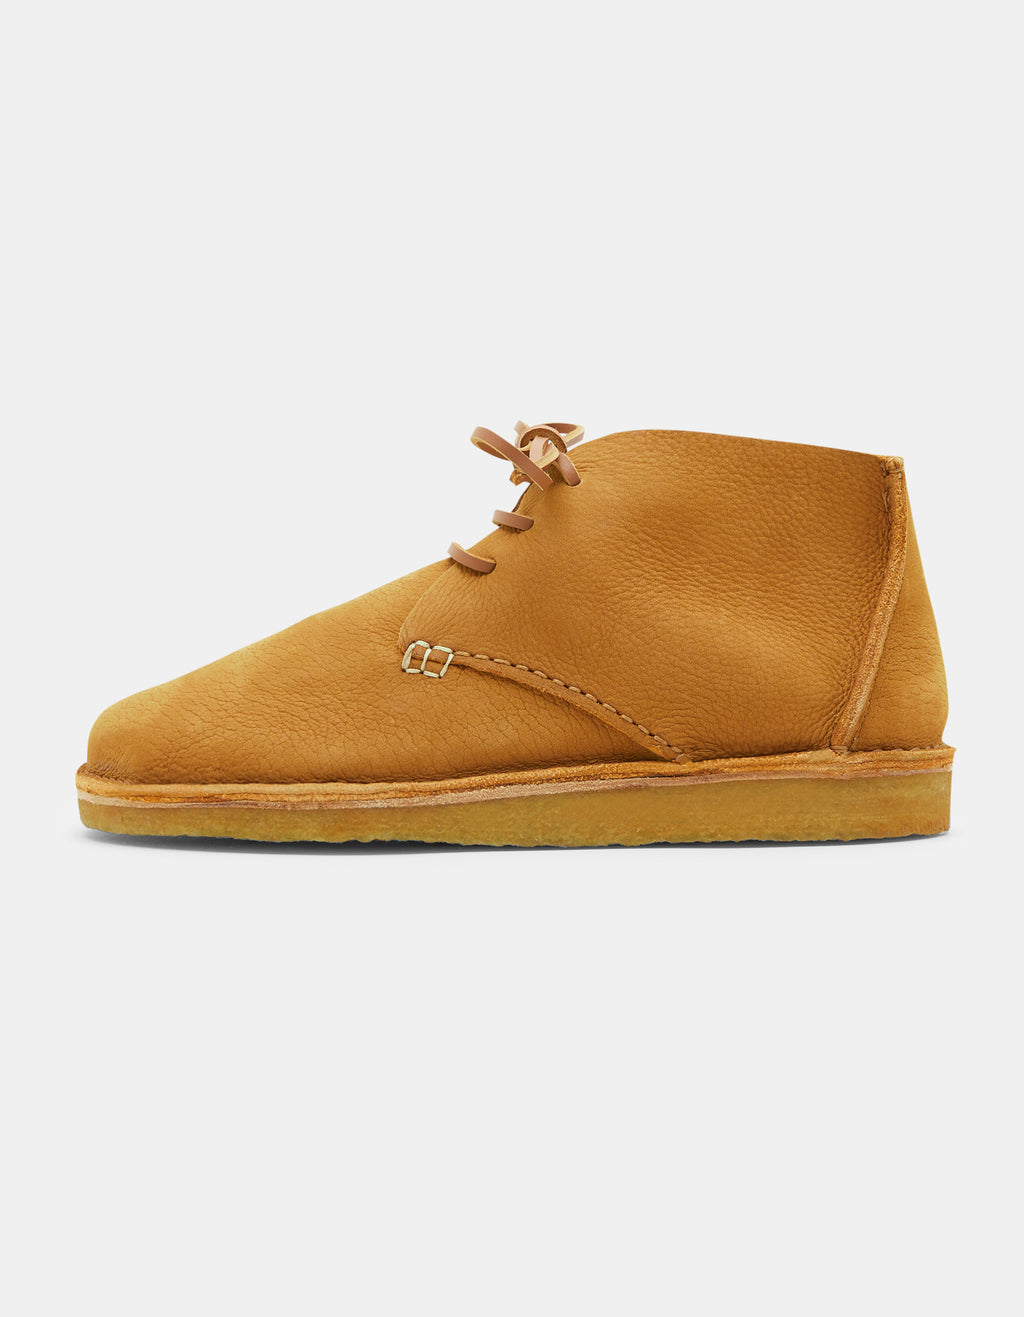 Autumn Winter 19 Collection – Yogi Footwear